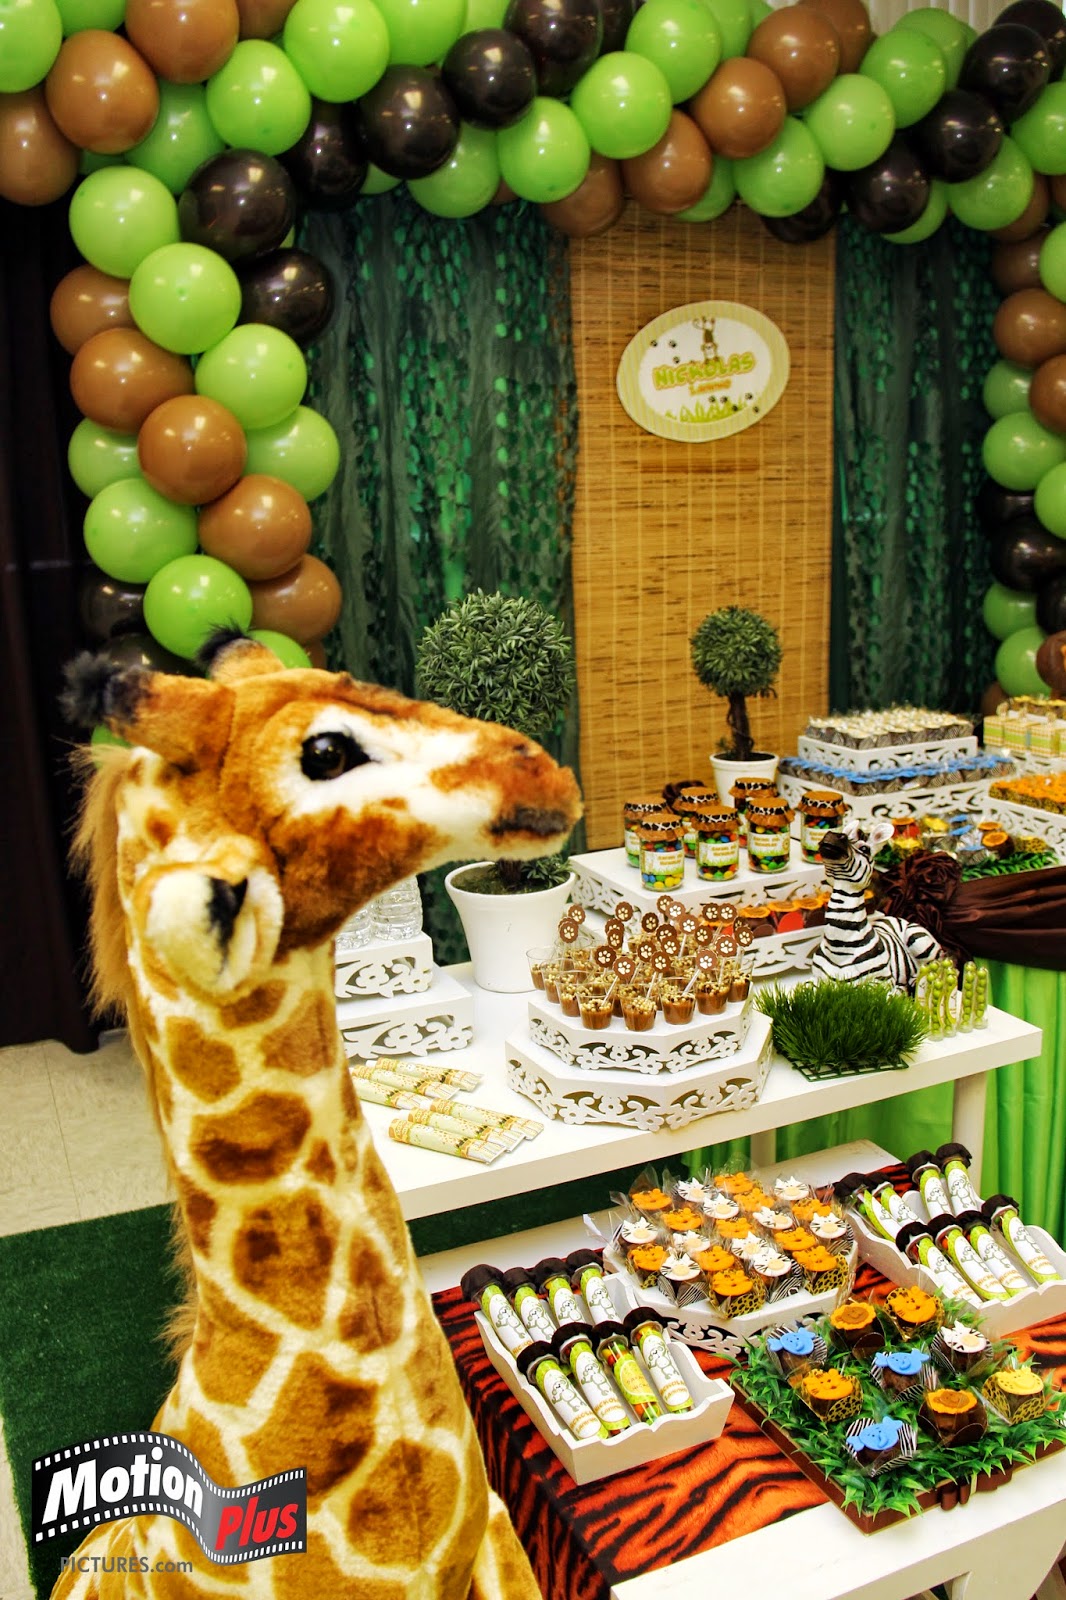 motion-plus-pictures-safari-themed-birthday-party-ideas